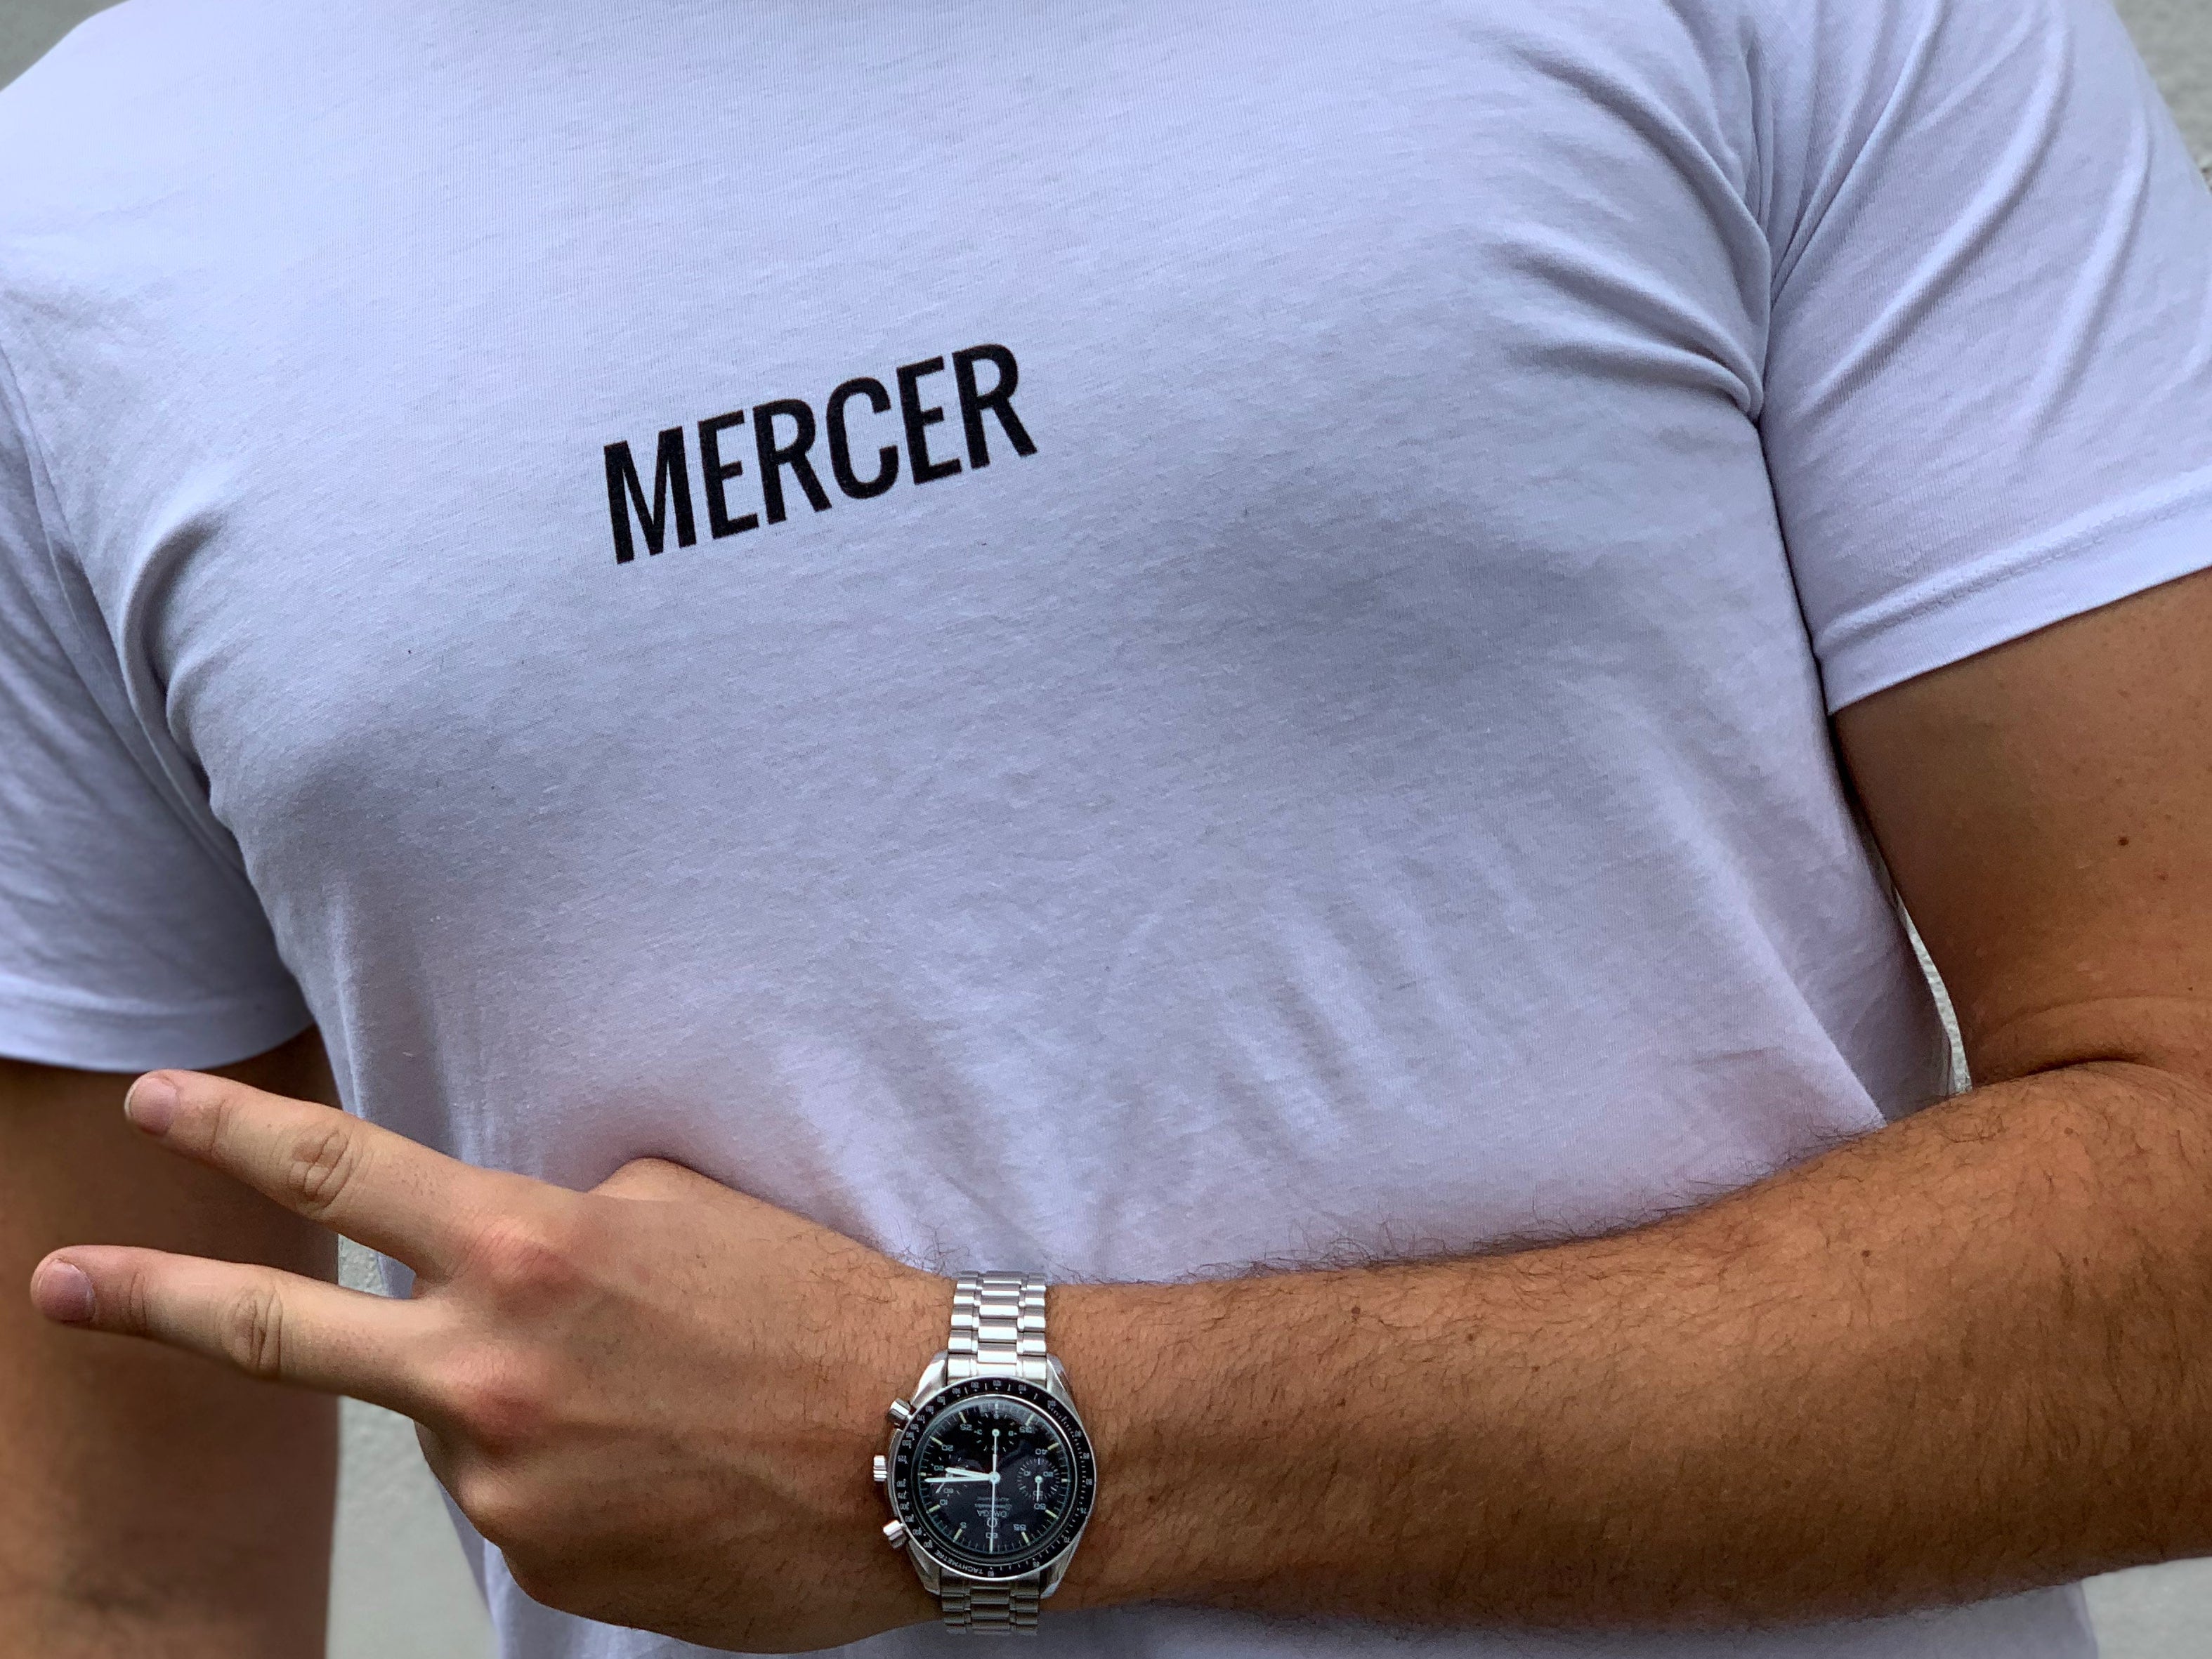 Omega Speedmaster Reduced worn with MERCER t-shirt